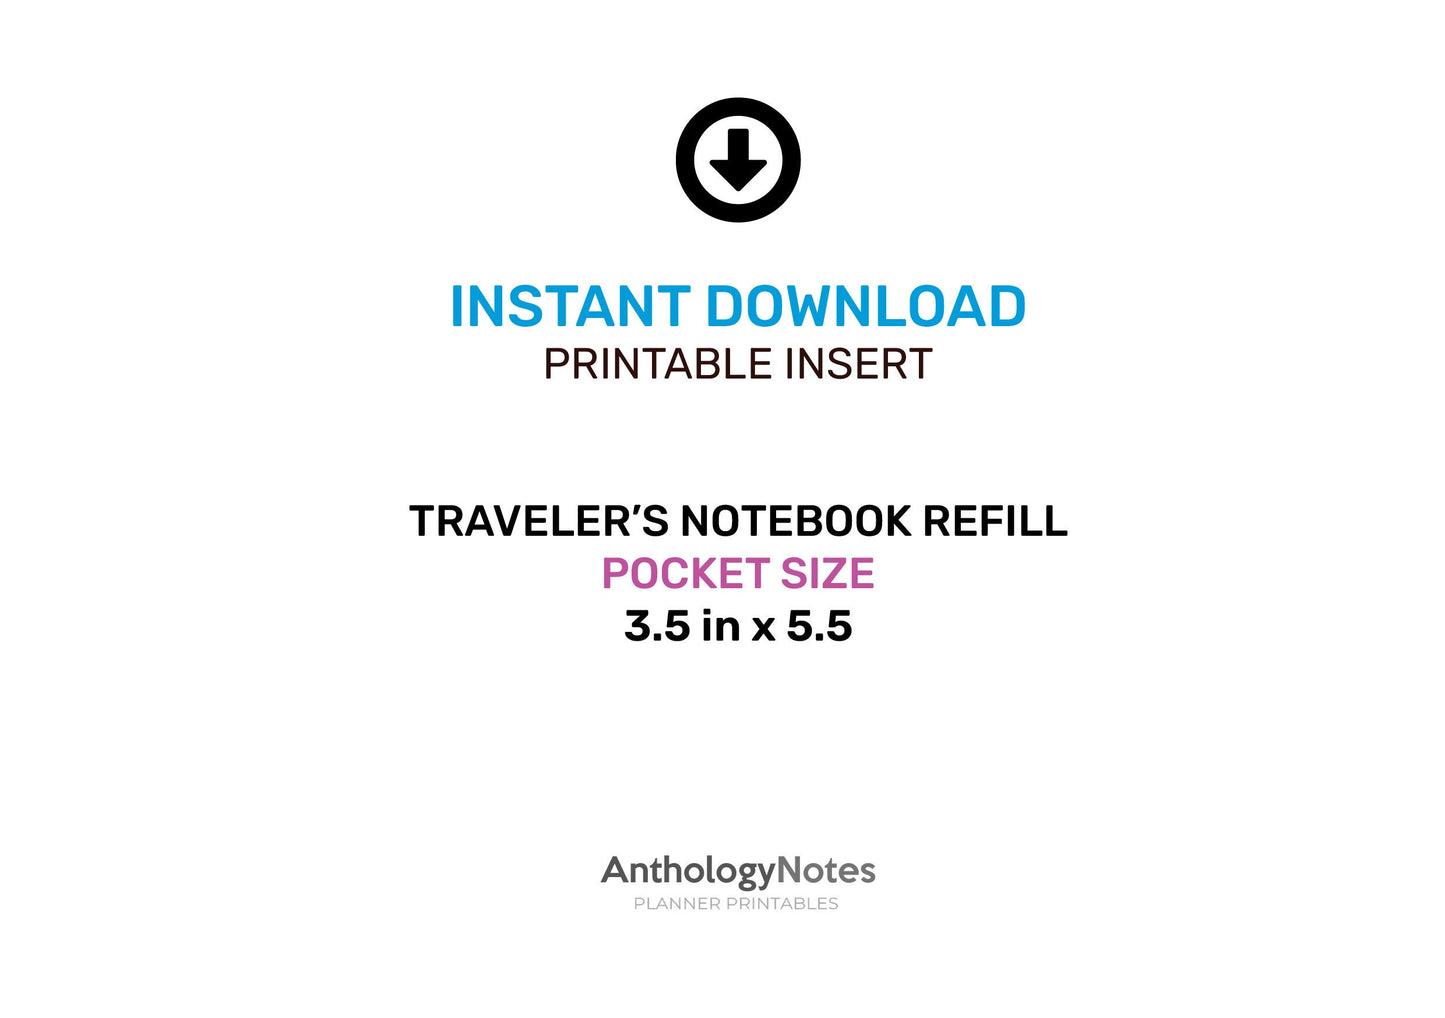 2024 TN POCKET WEEKLY Horizontal Grid Insert Traveler's Notebook Insert Wo1P Minimalist